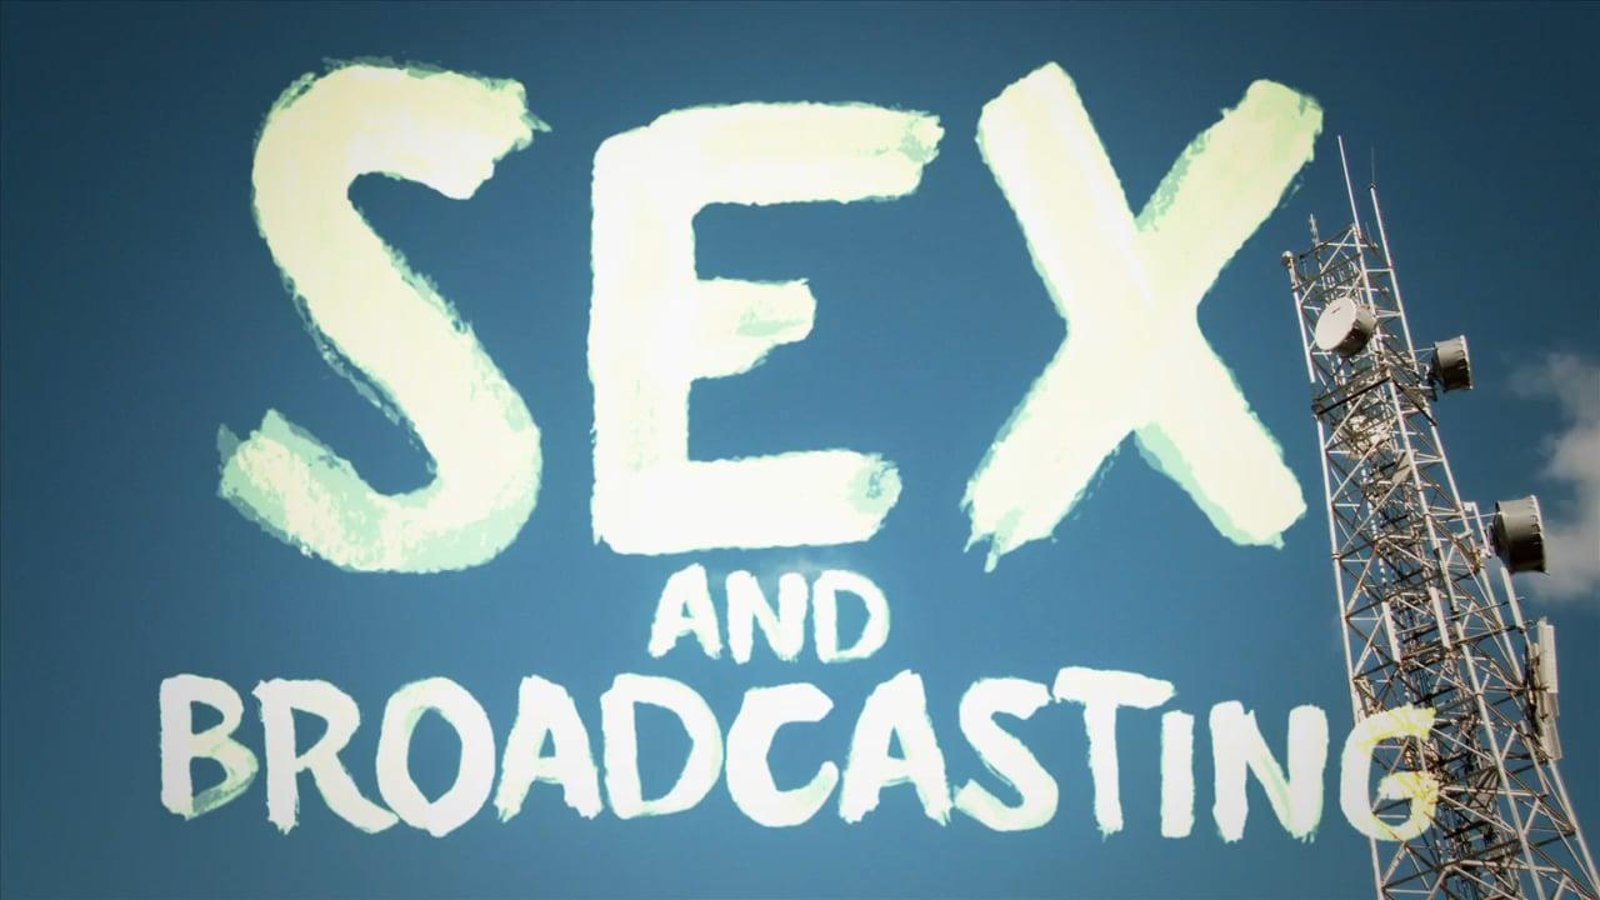 Sex and Broadcasting - The World's Strangest Radio Station